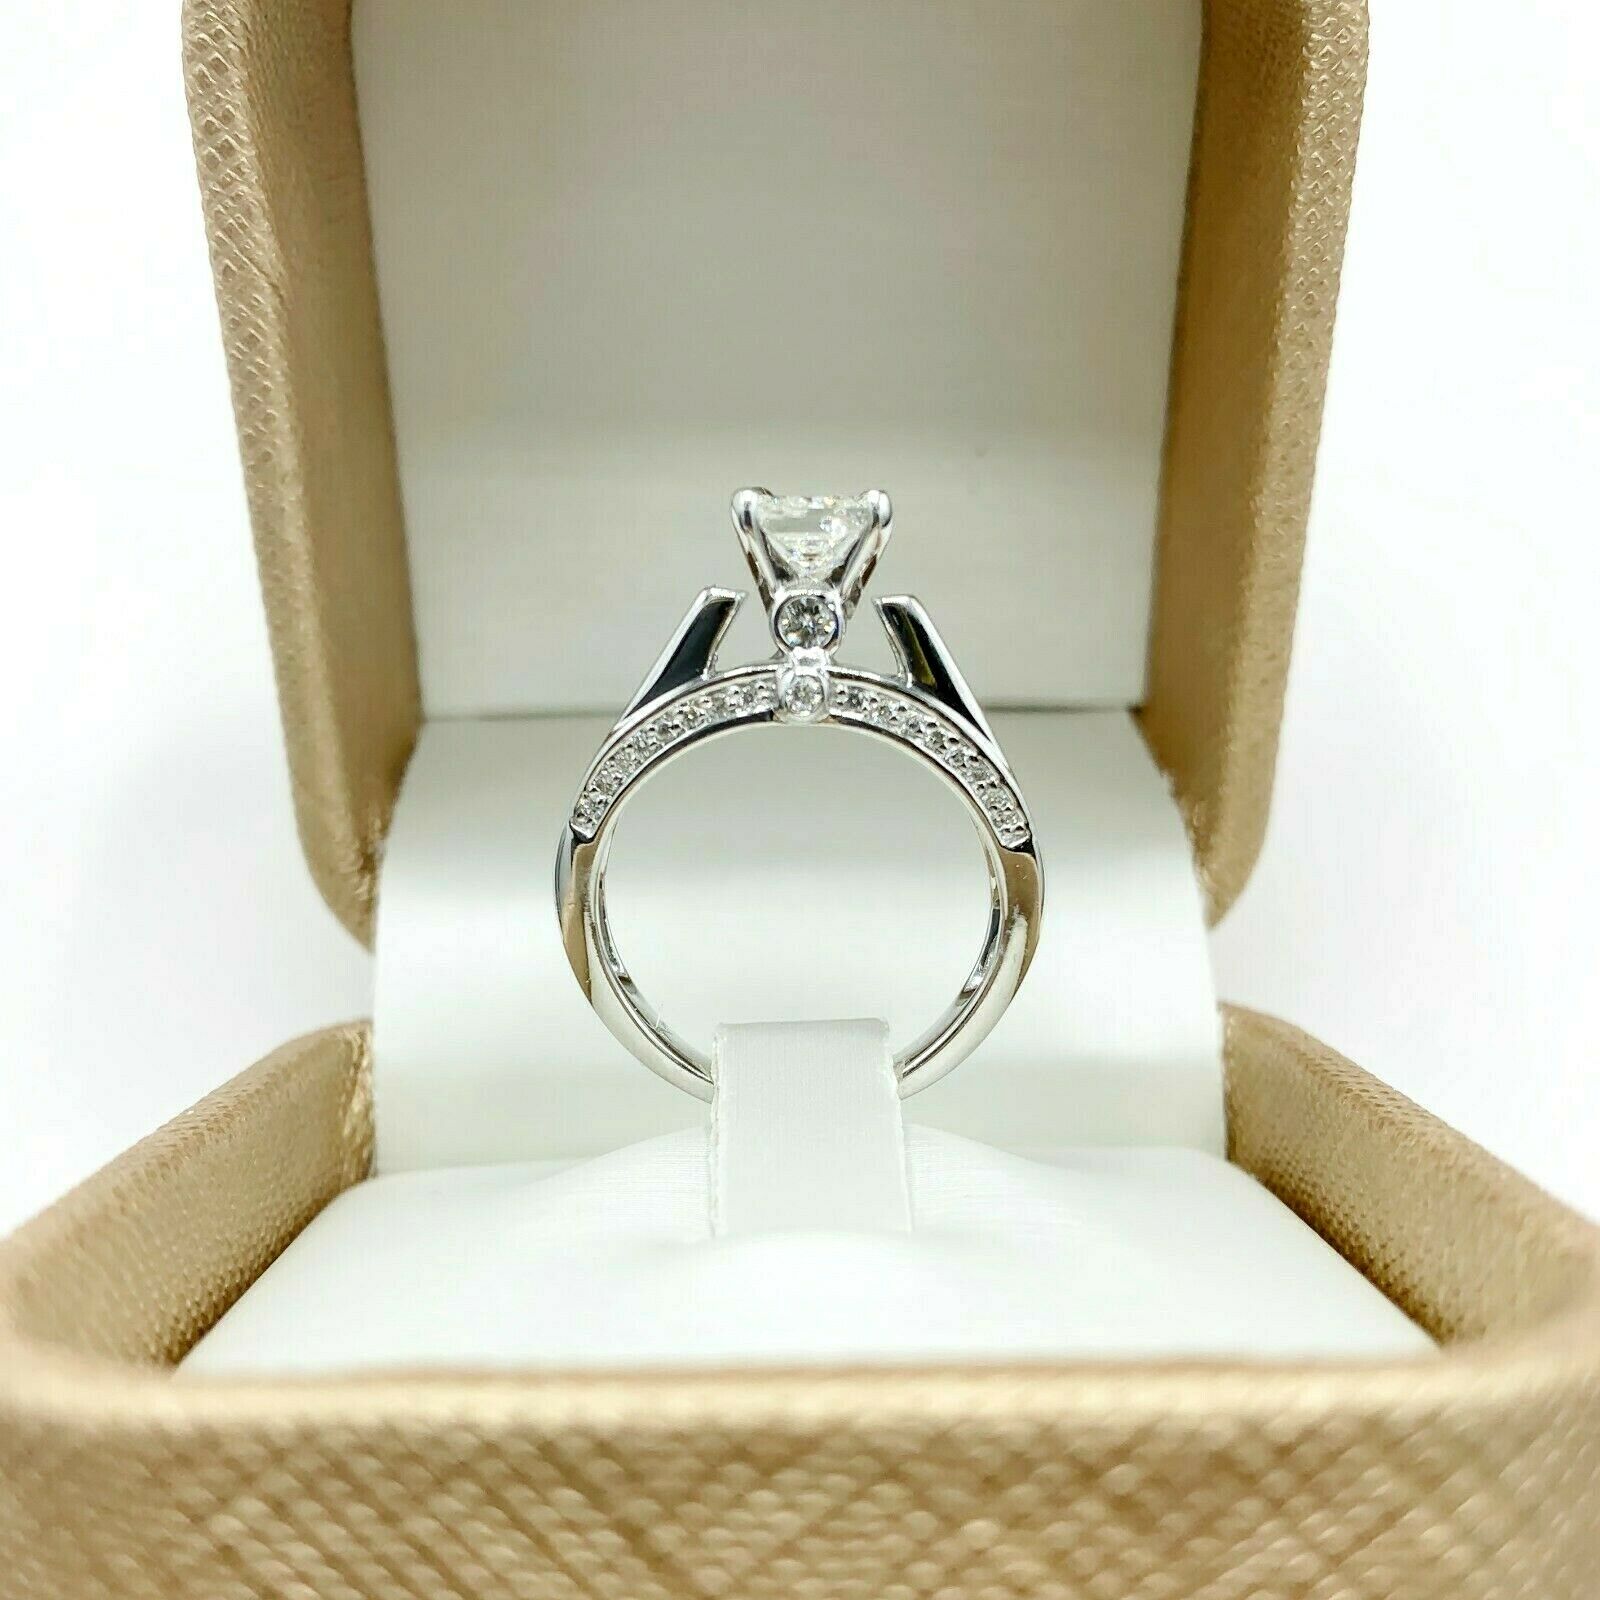 2.12 Carats tw Princess Cut Diamond 3 Sided Engagement Ring 1.02 Carat Center